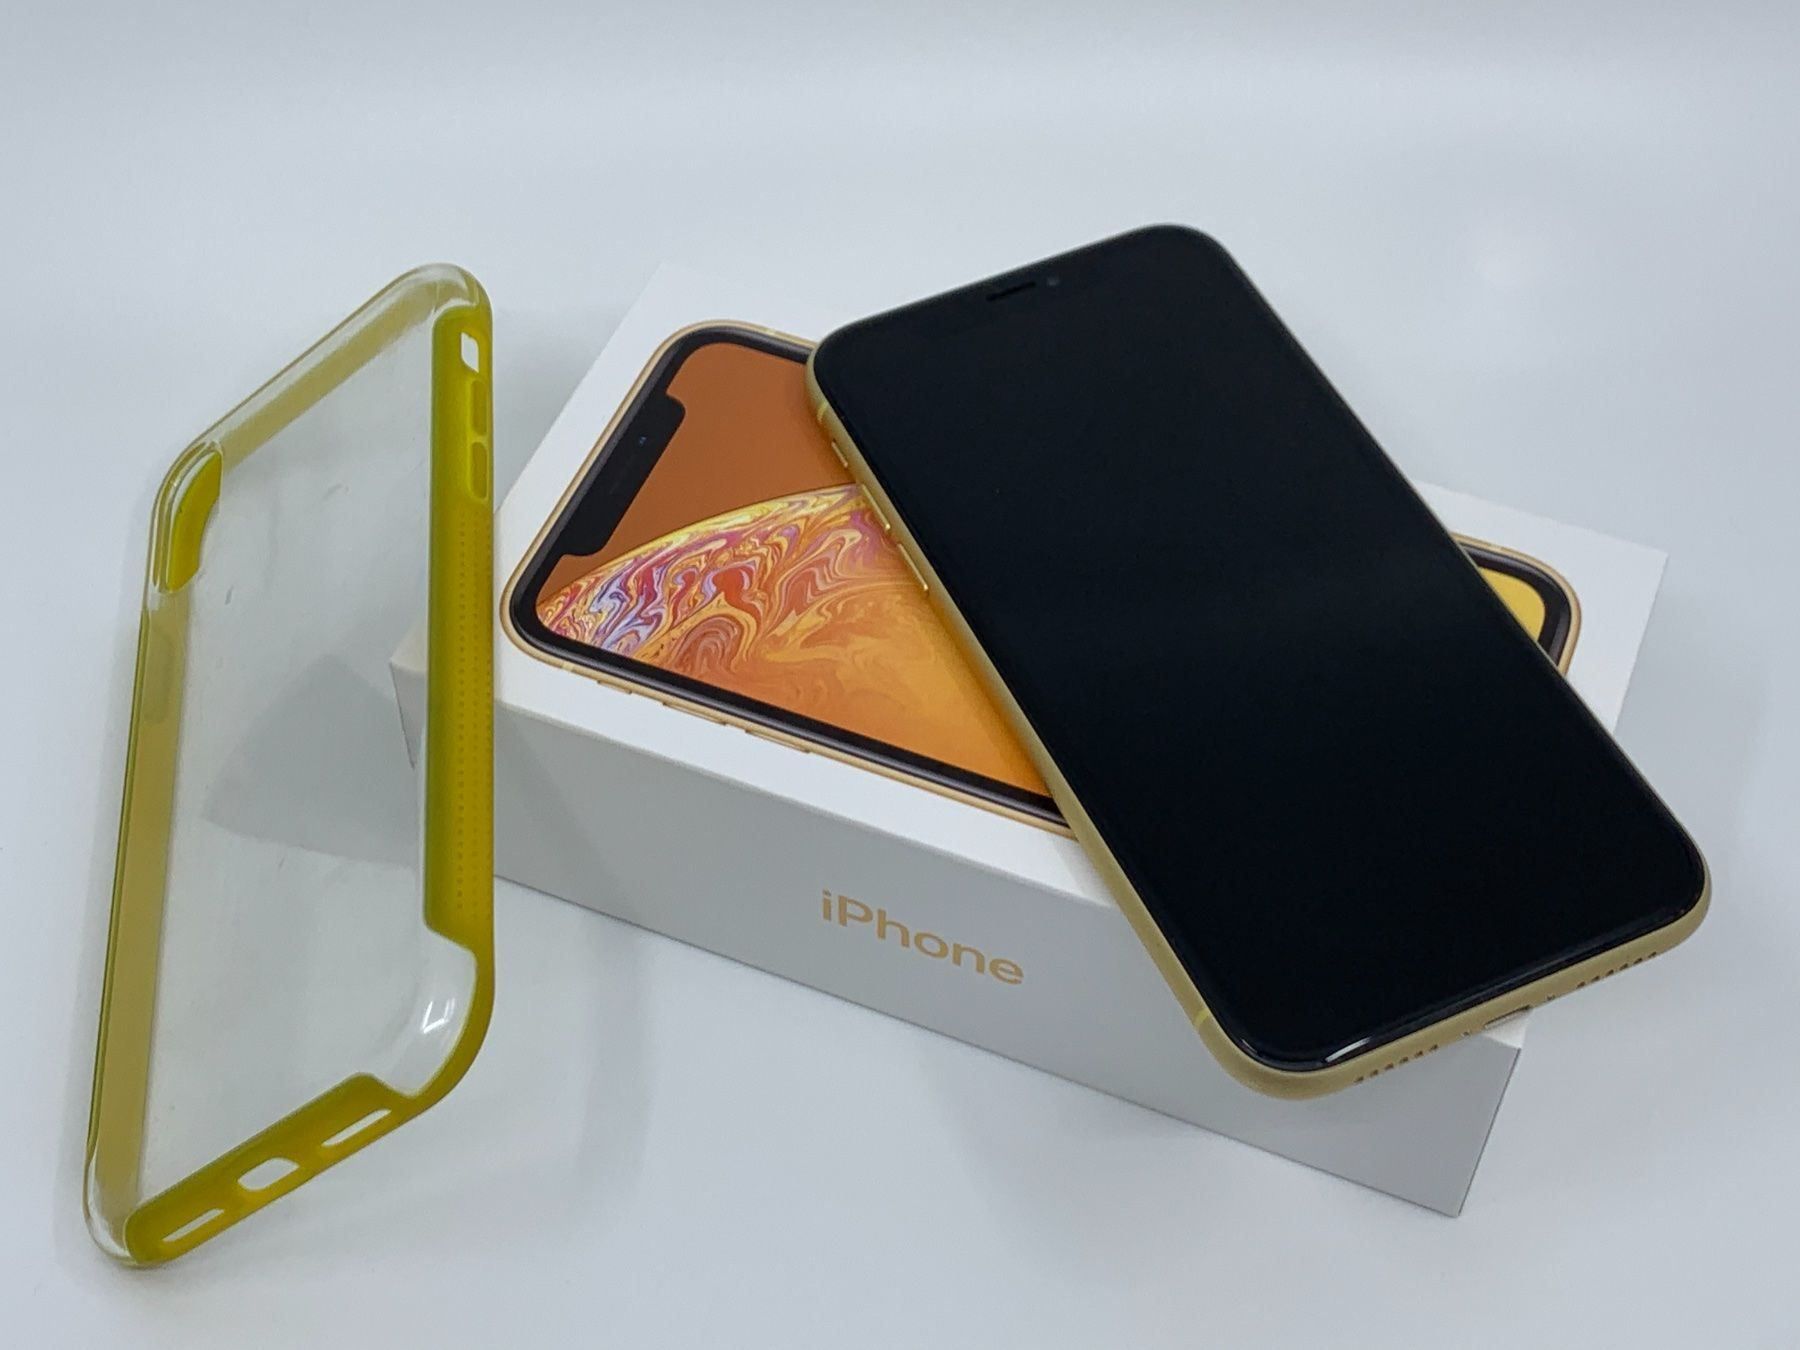 Apple iPhone XR yellow 64 GB | Kaufen auf Ricardo